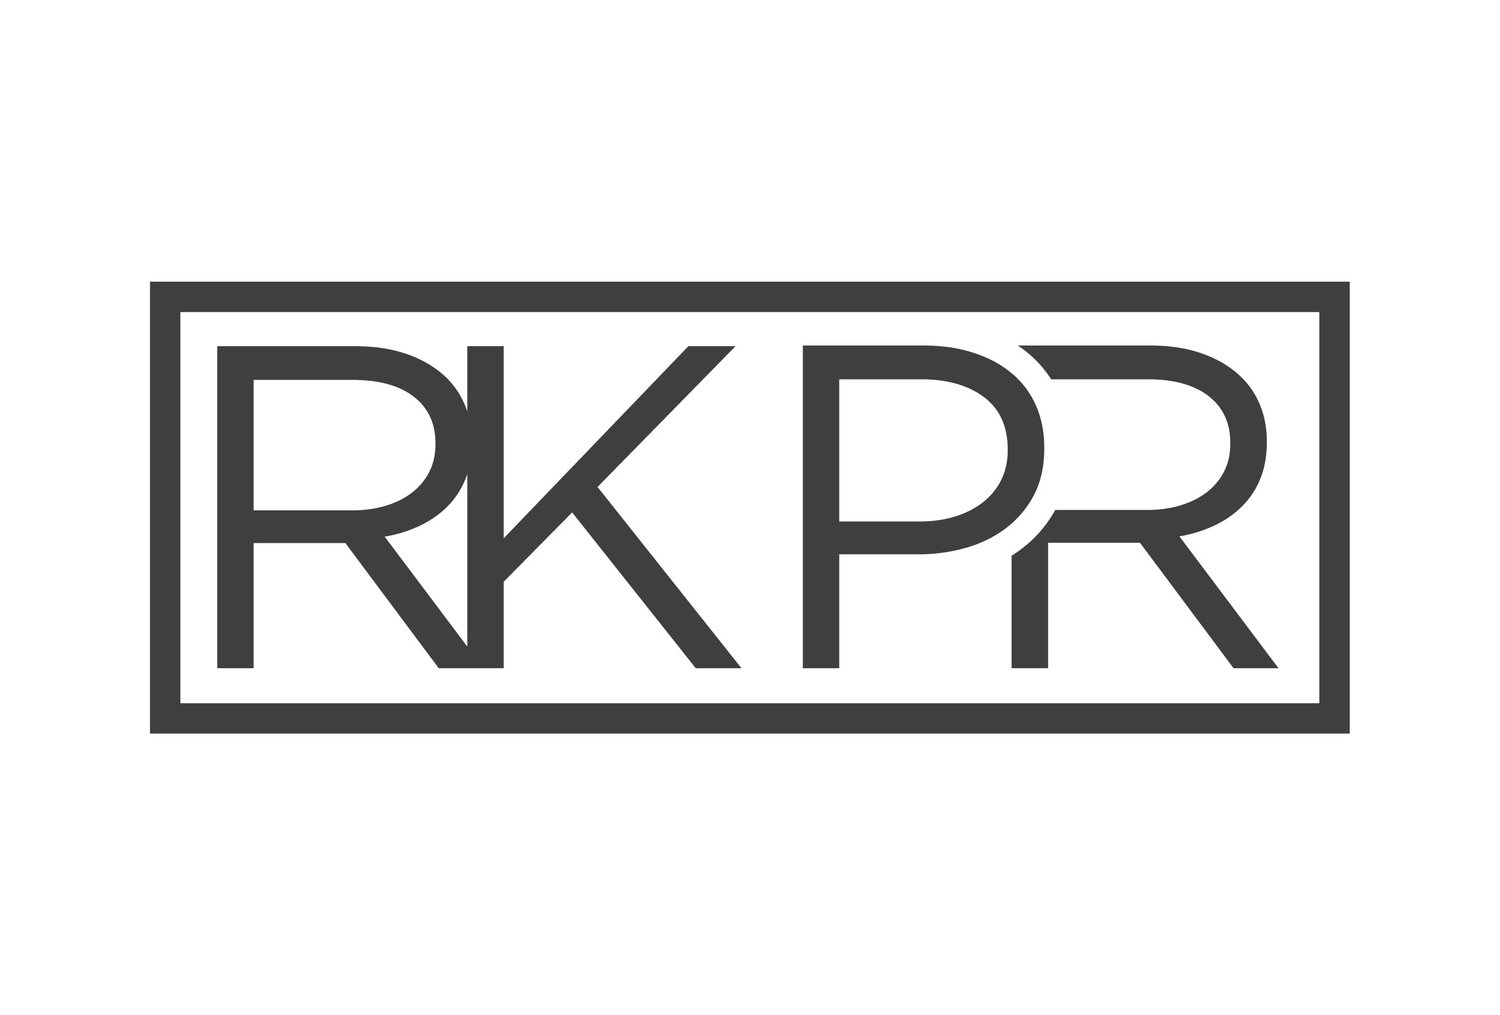 RK PR - Reetu Kabra Public Relations